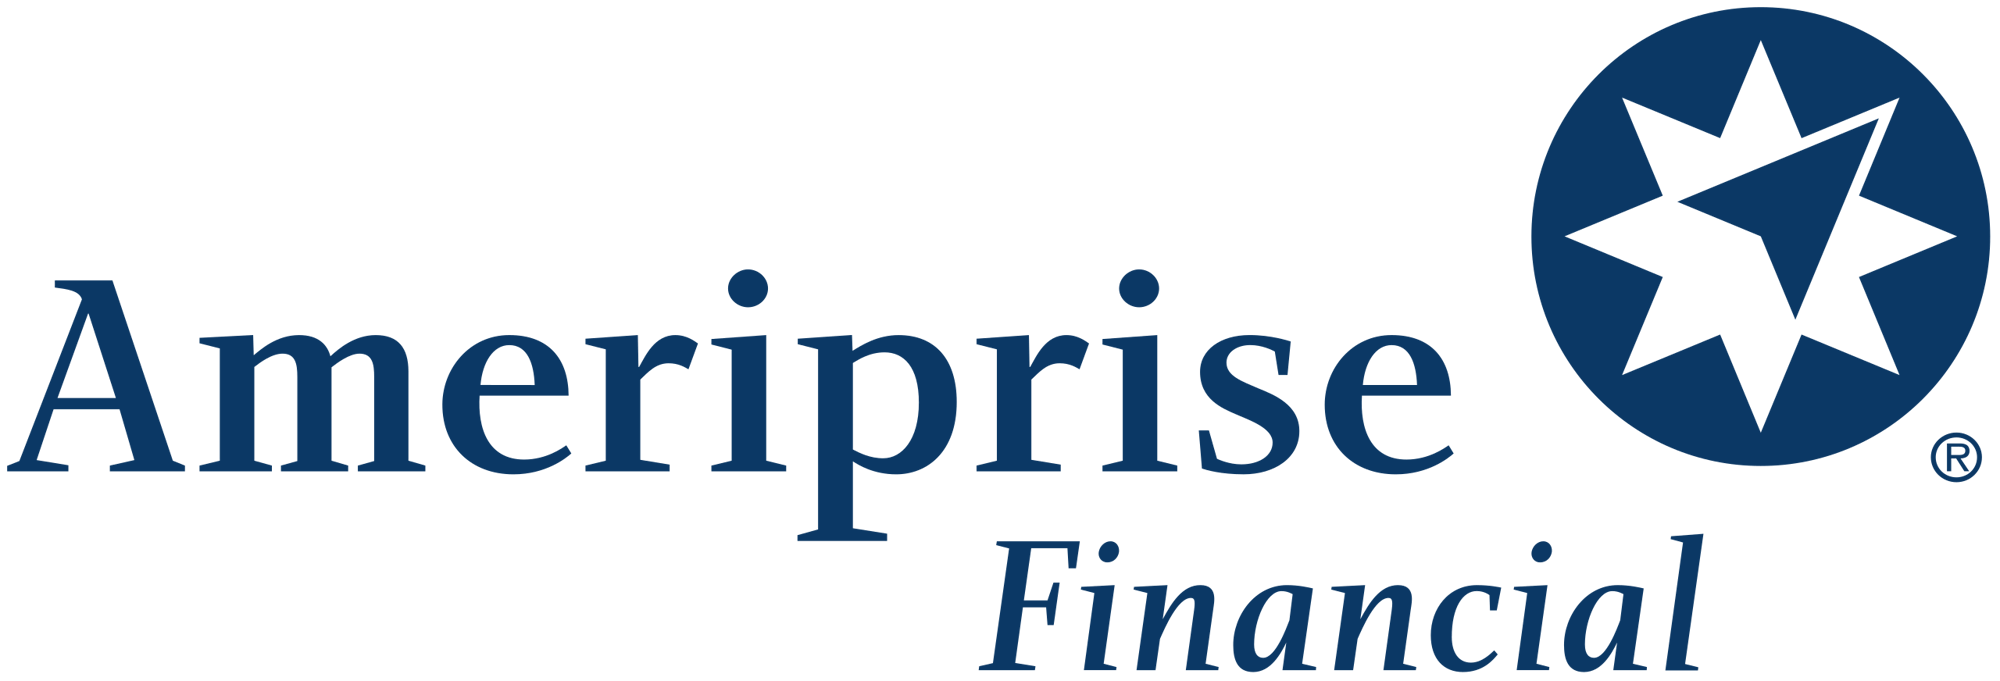 Ameriprise_Financial_logo.svg